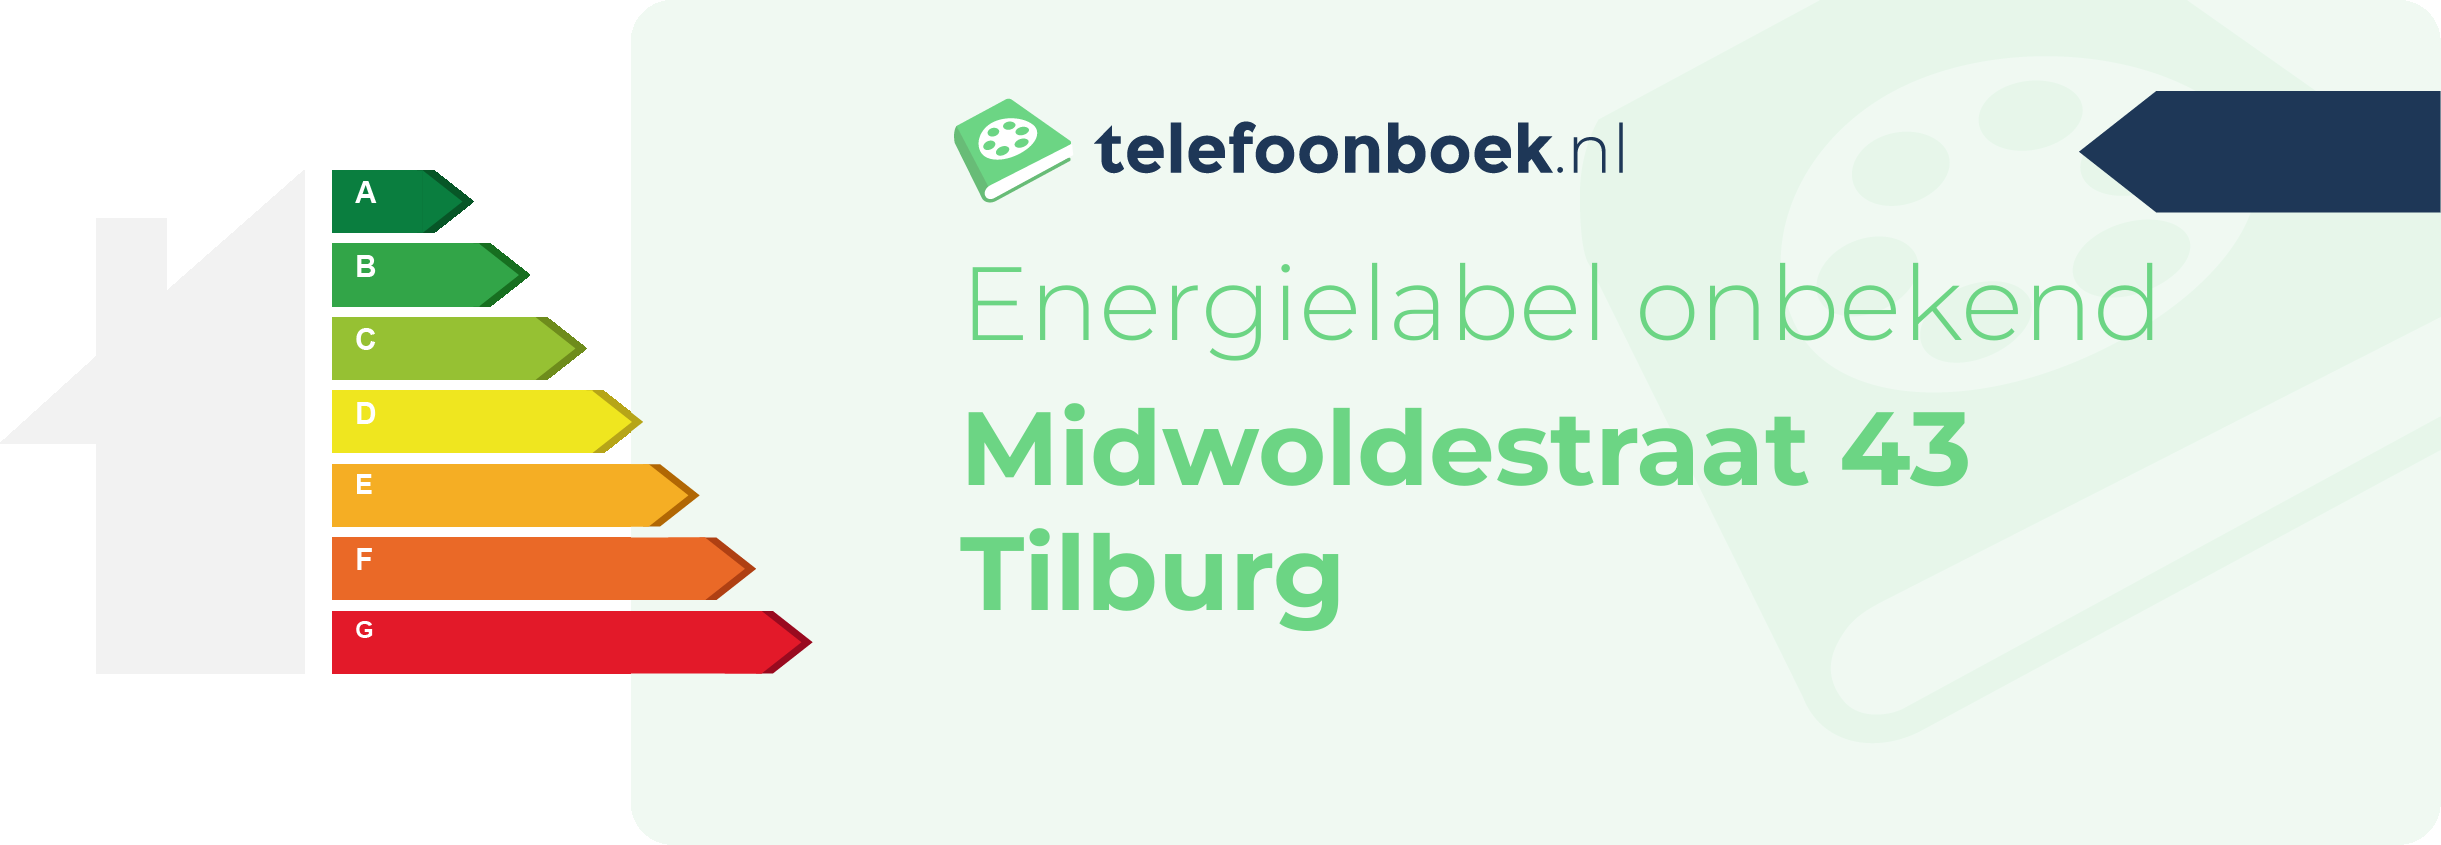 Energielabel Midwoldestraat 43 Tilburg